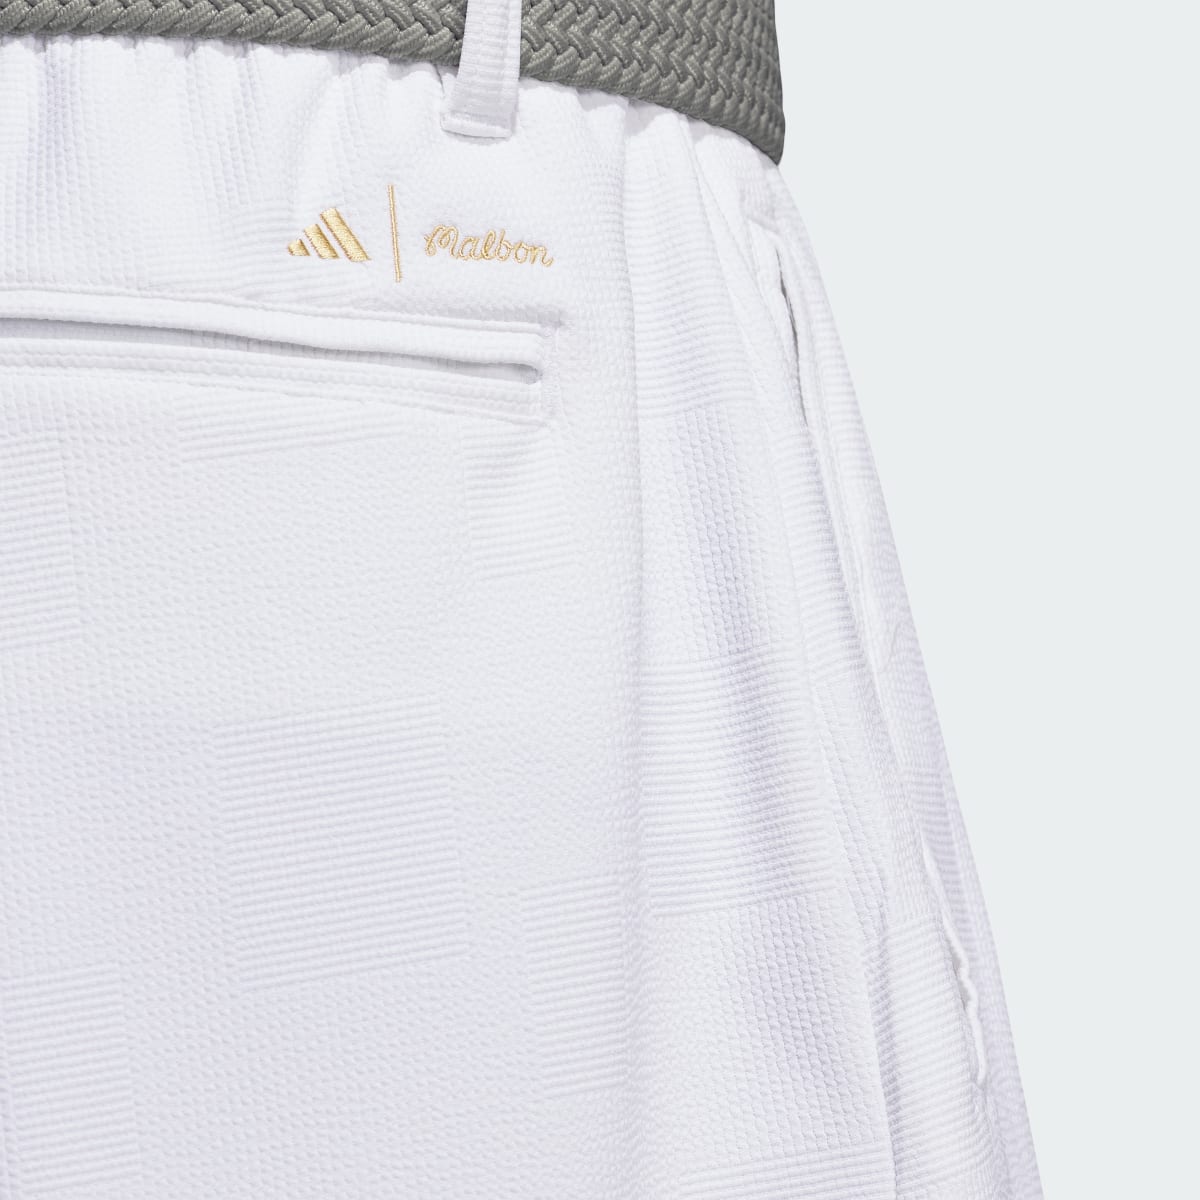 Adidas Malbon Shorts. 5